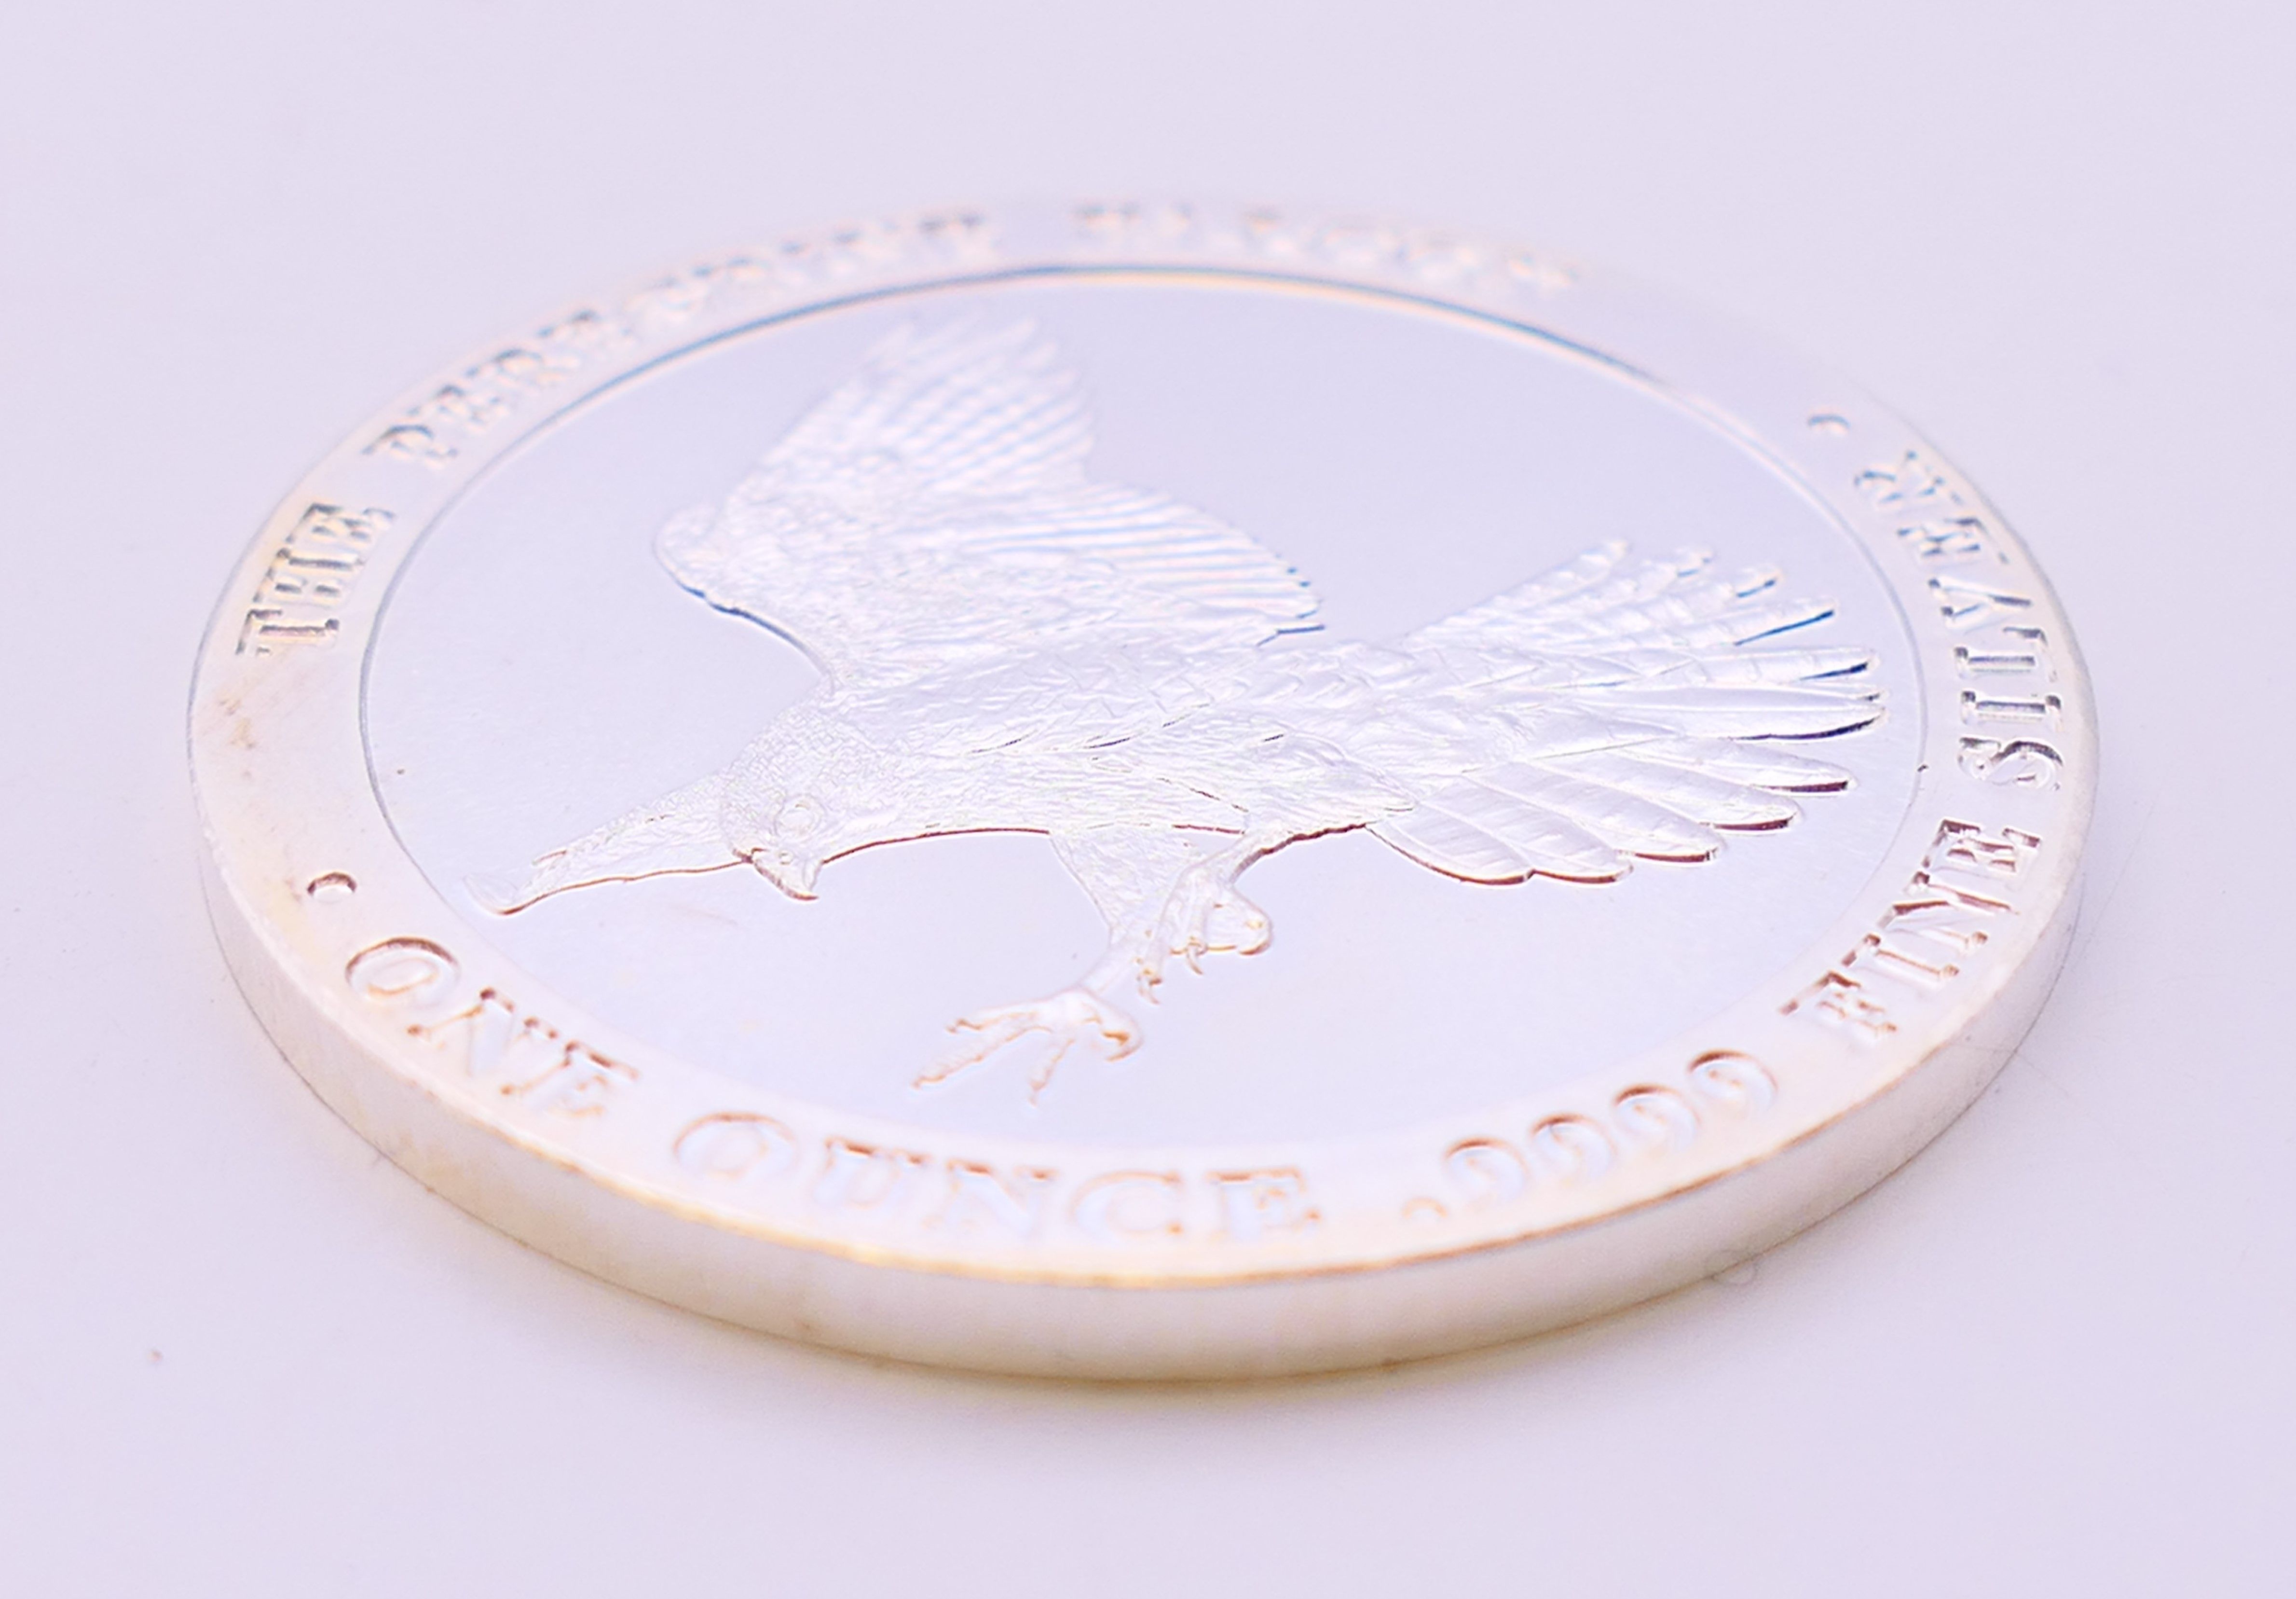 A .999 fine silver one ounce peregrine falcon coin. 4 cm diameter. - Image 2 of 4